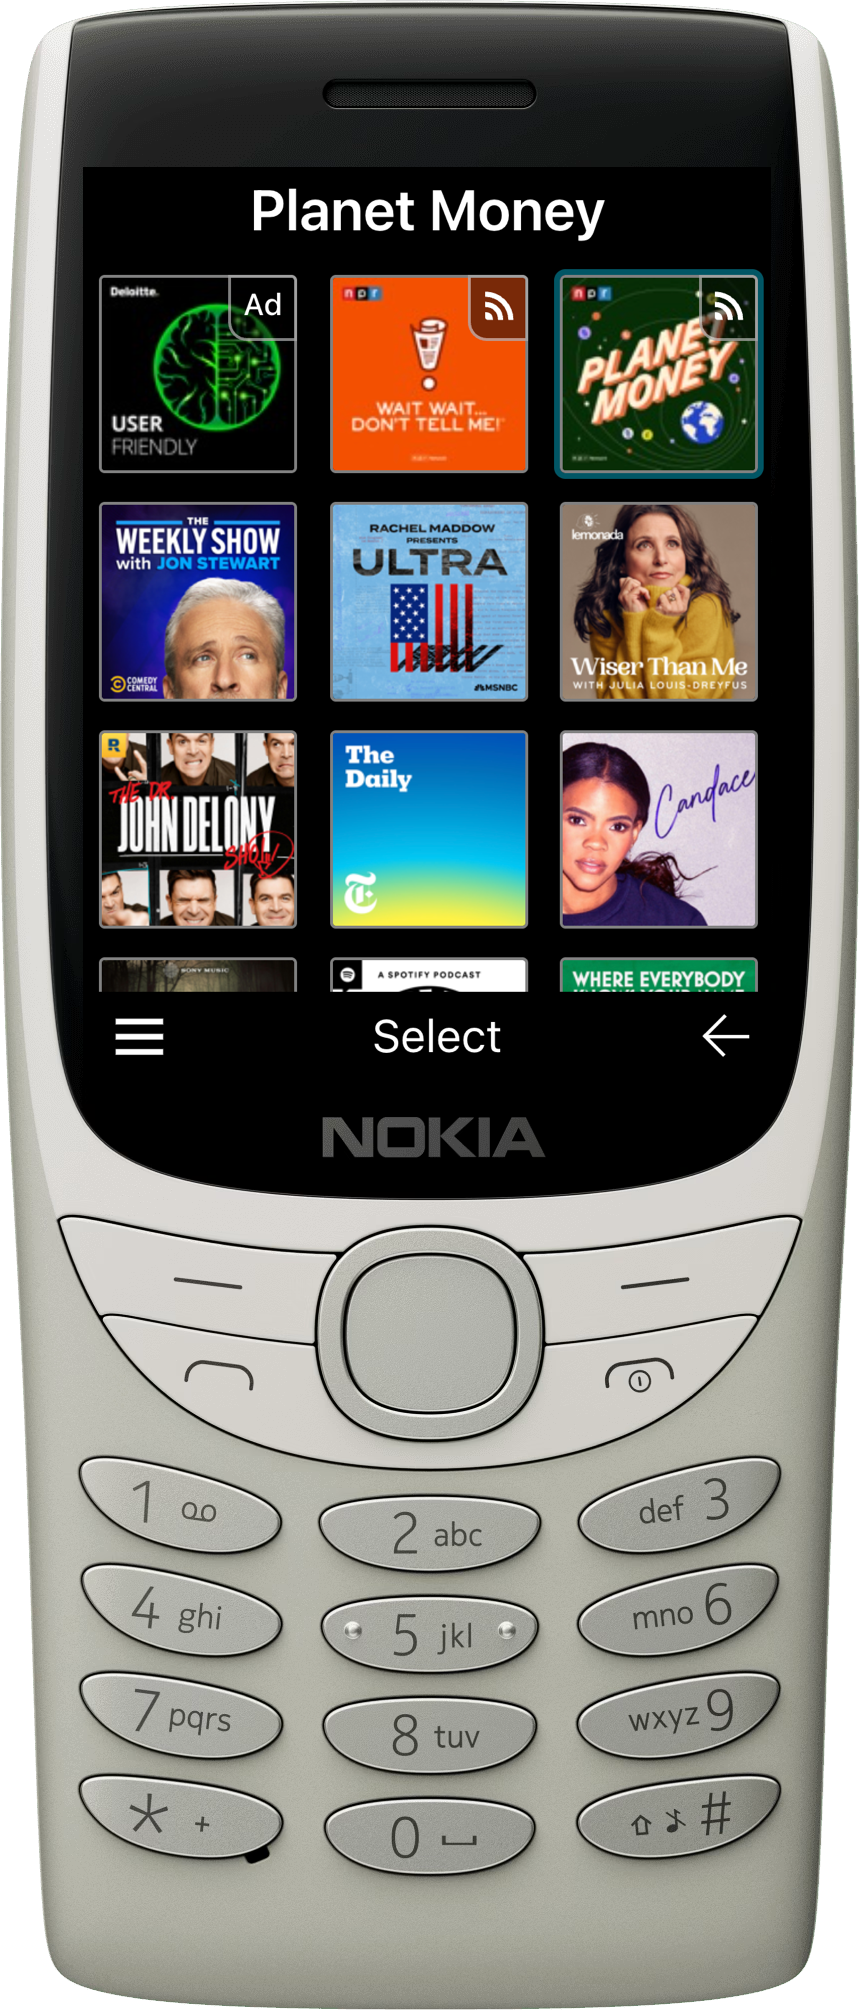 PodLP on Nokia device